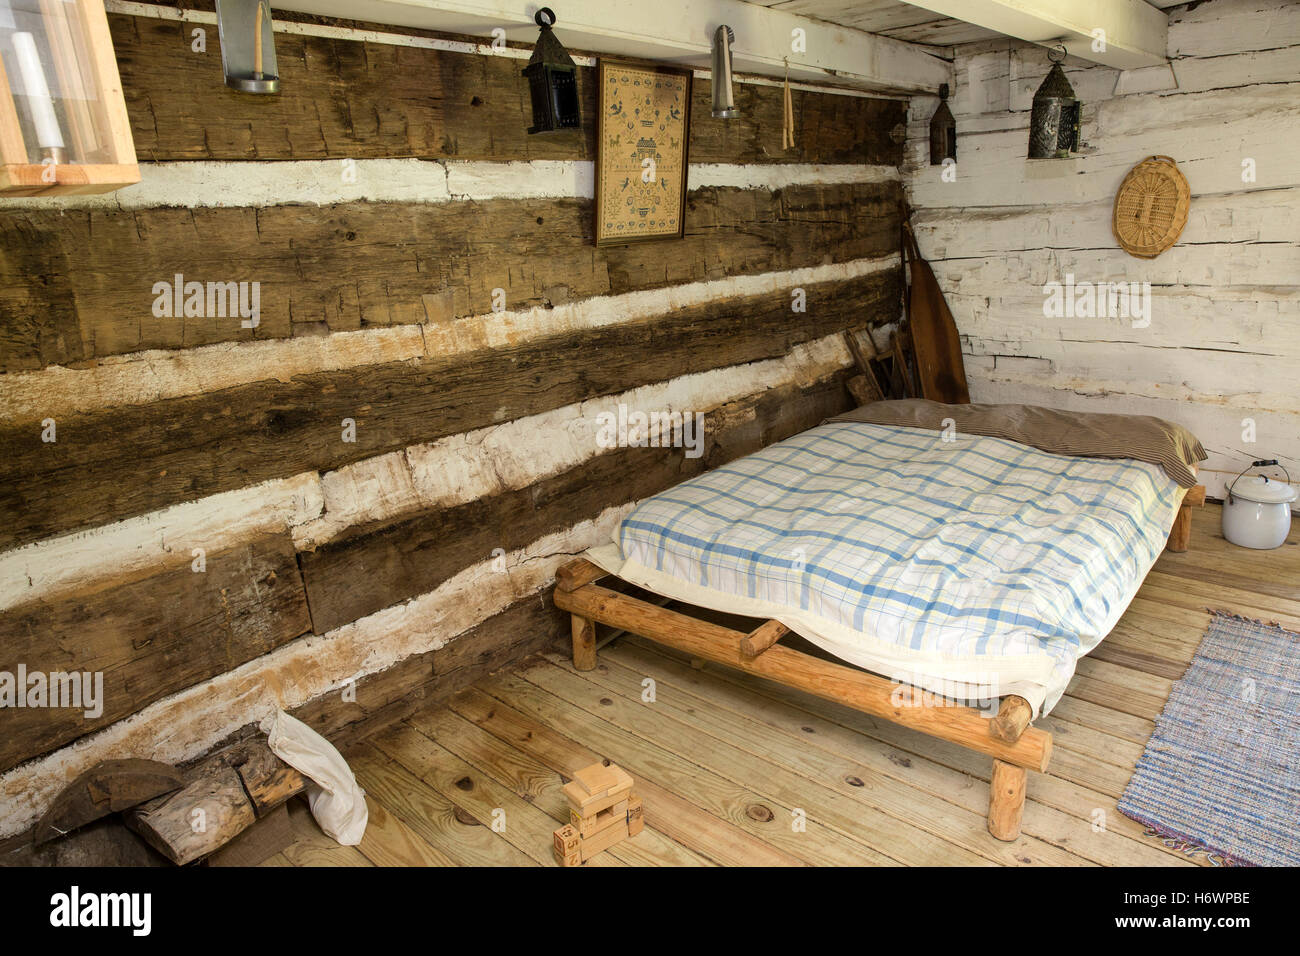 pioneer bedding